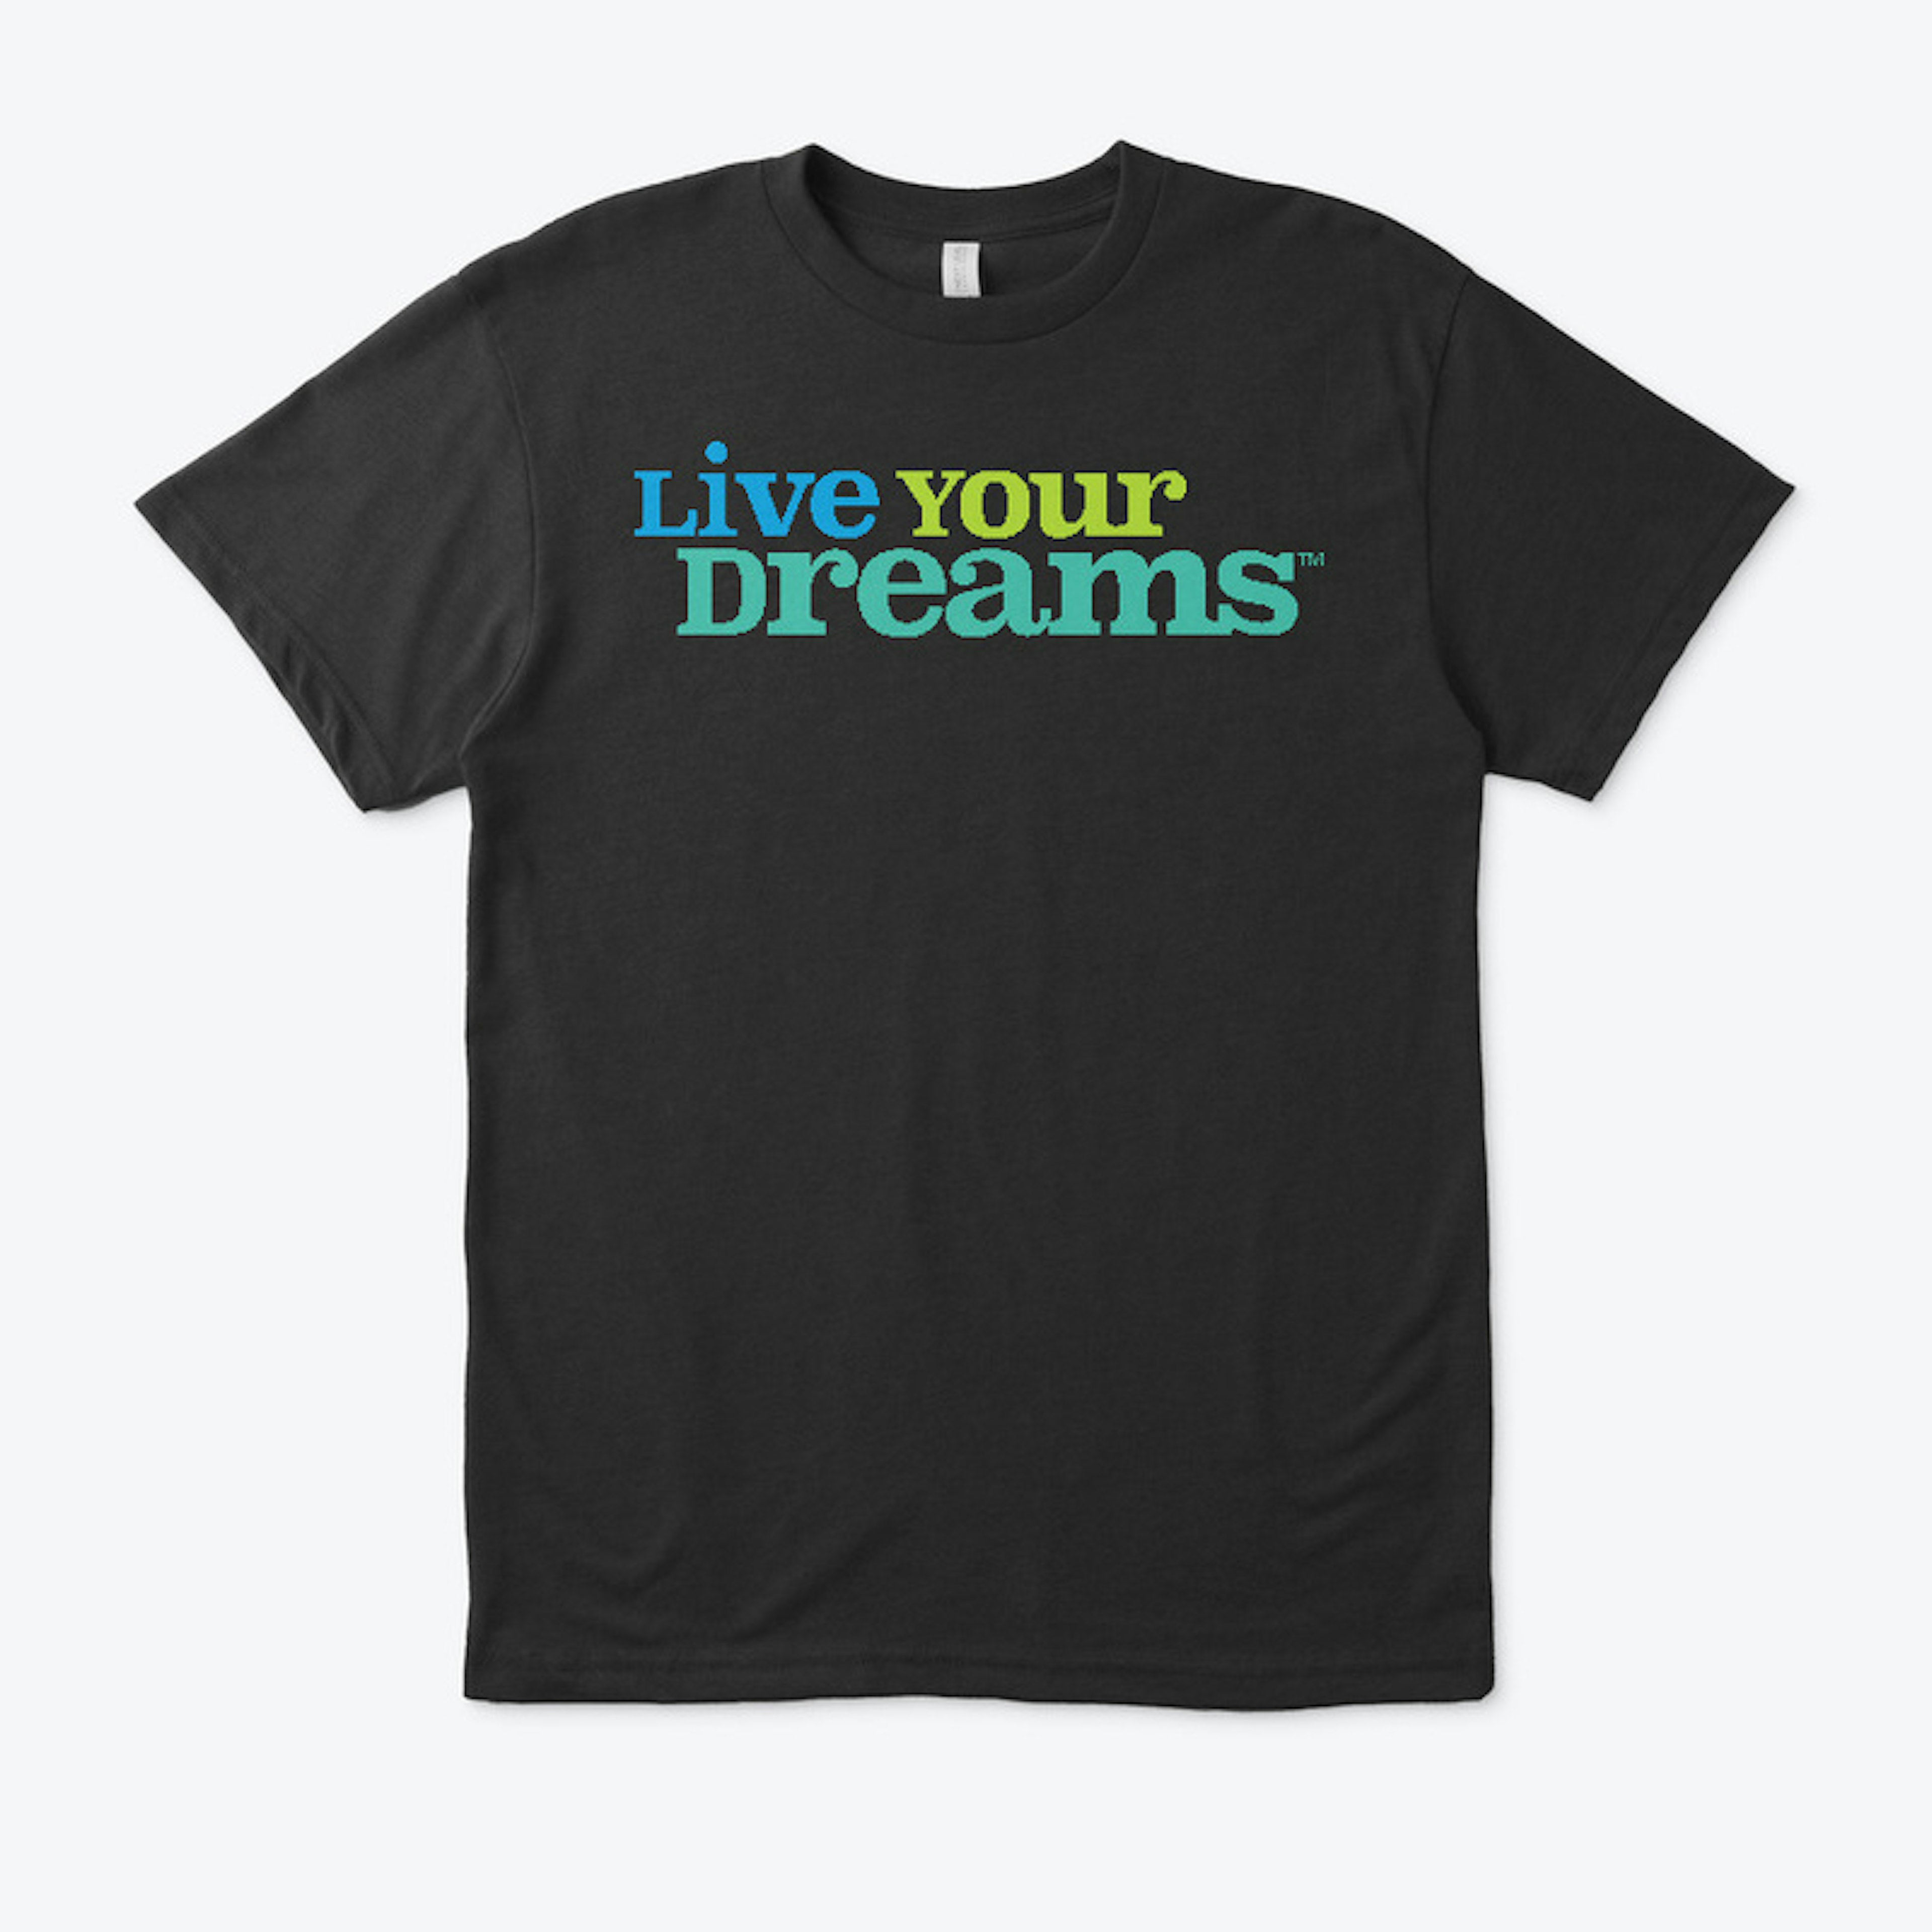 Live Your Dreams brand new design